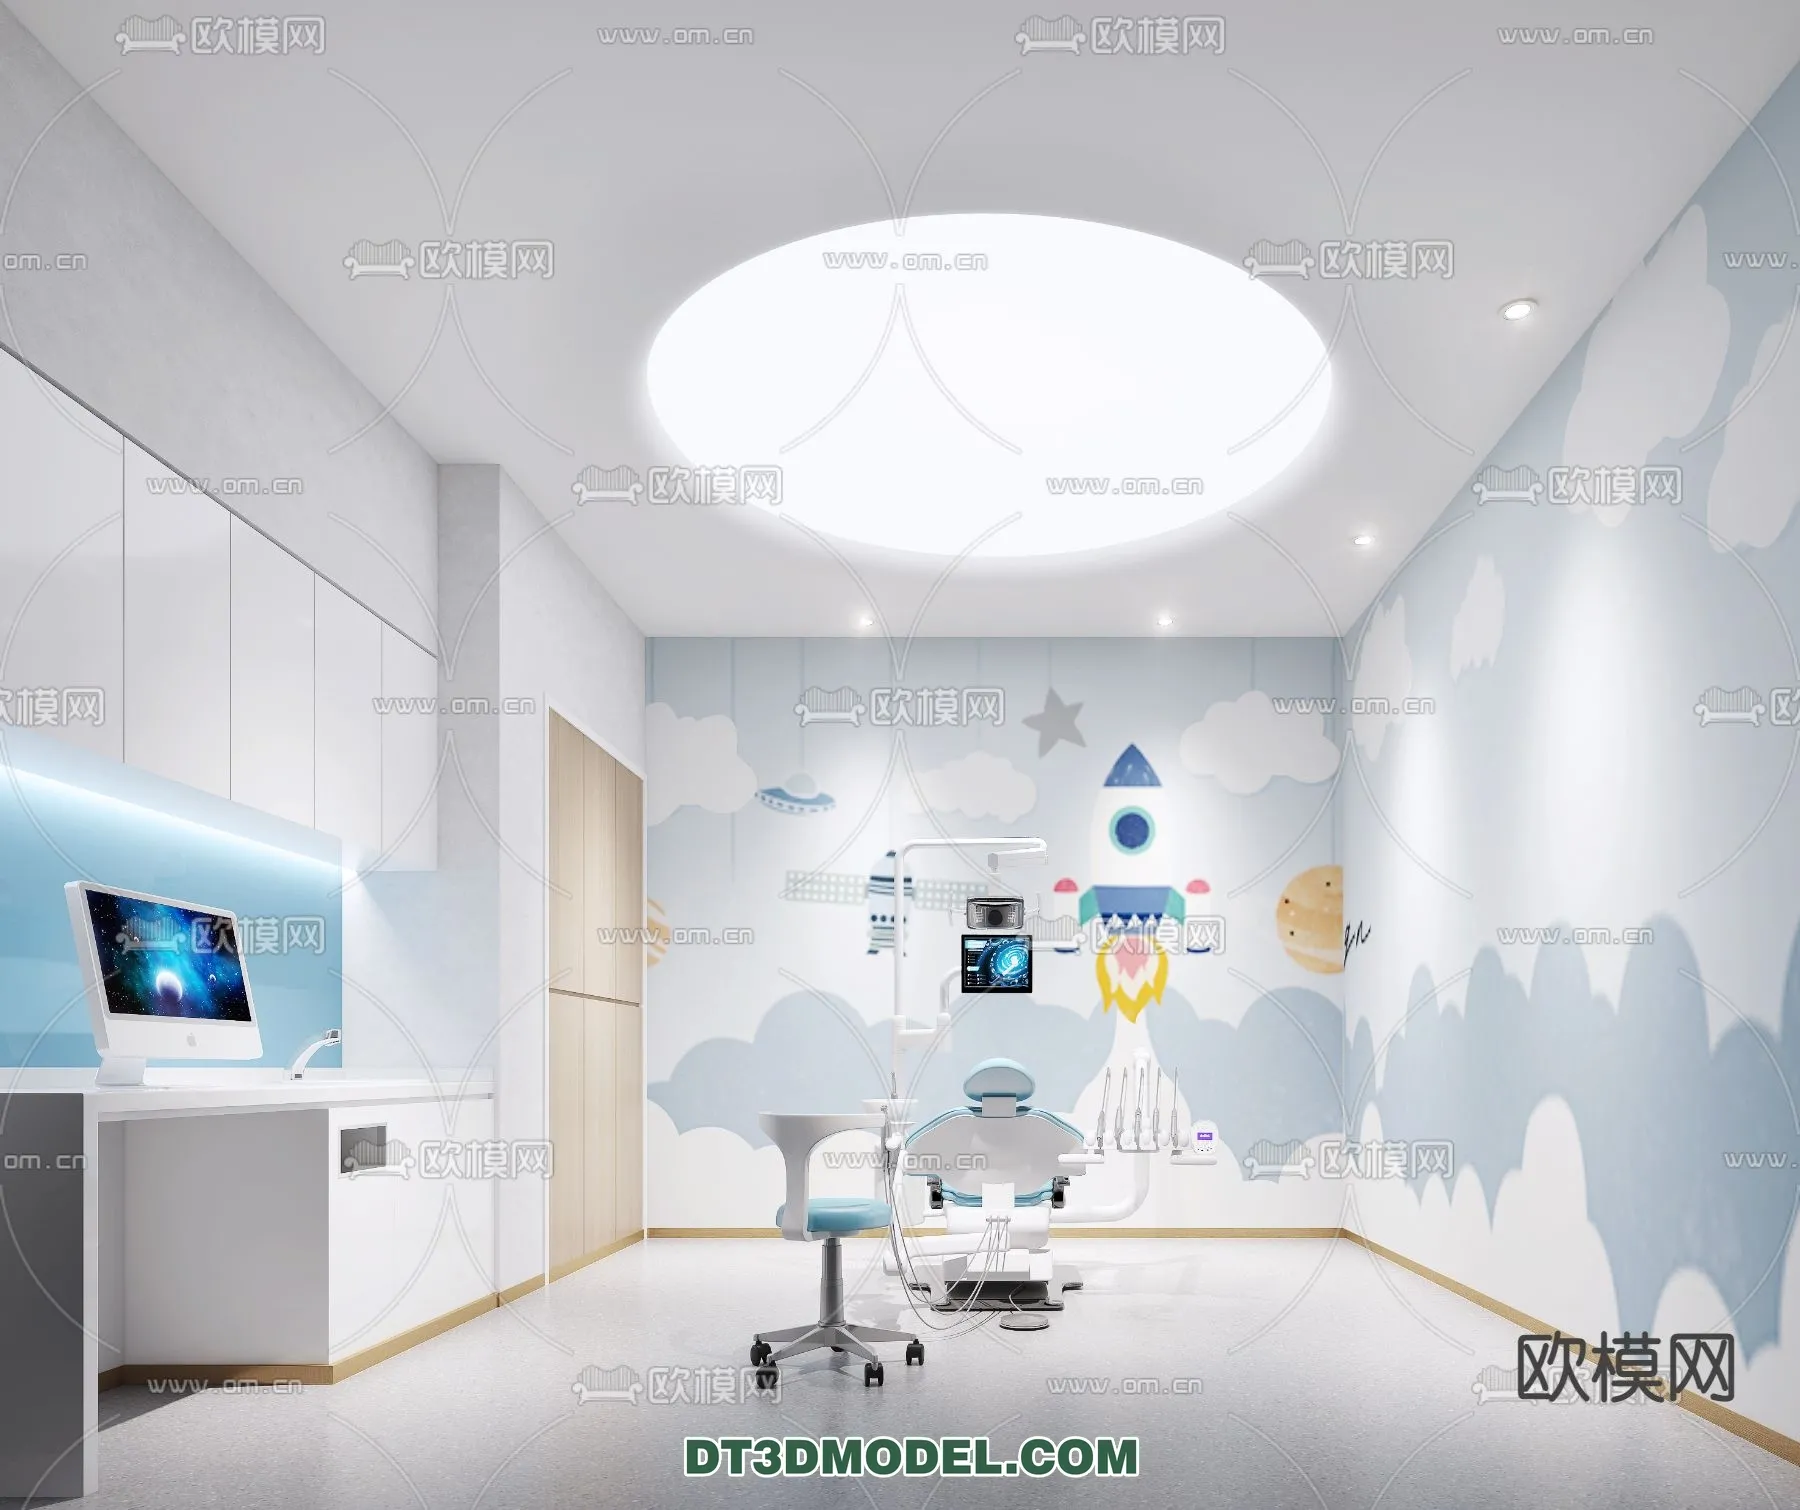 HOSPITAL 3D SCENES – MODERN – 0125